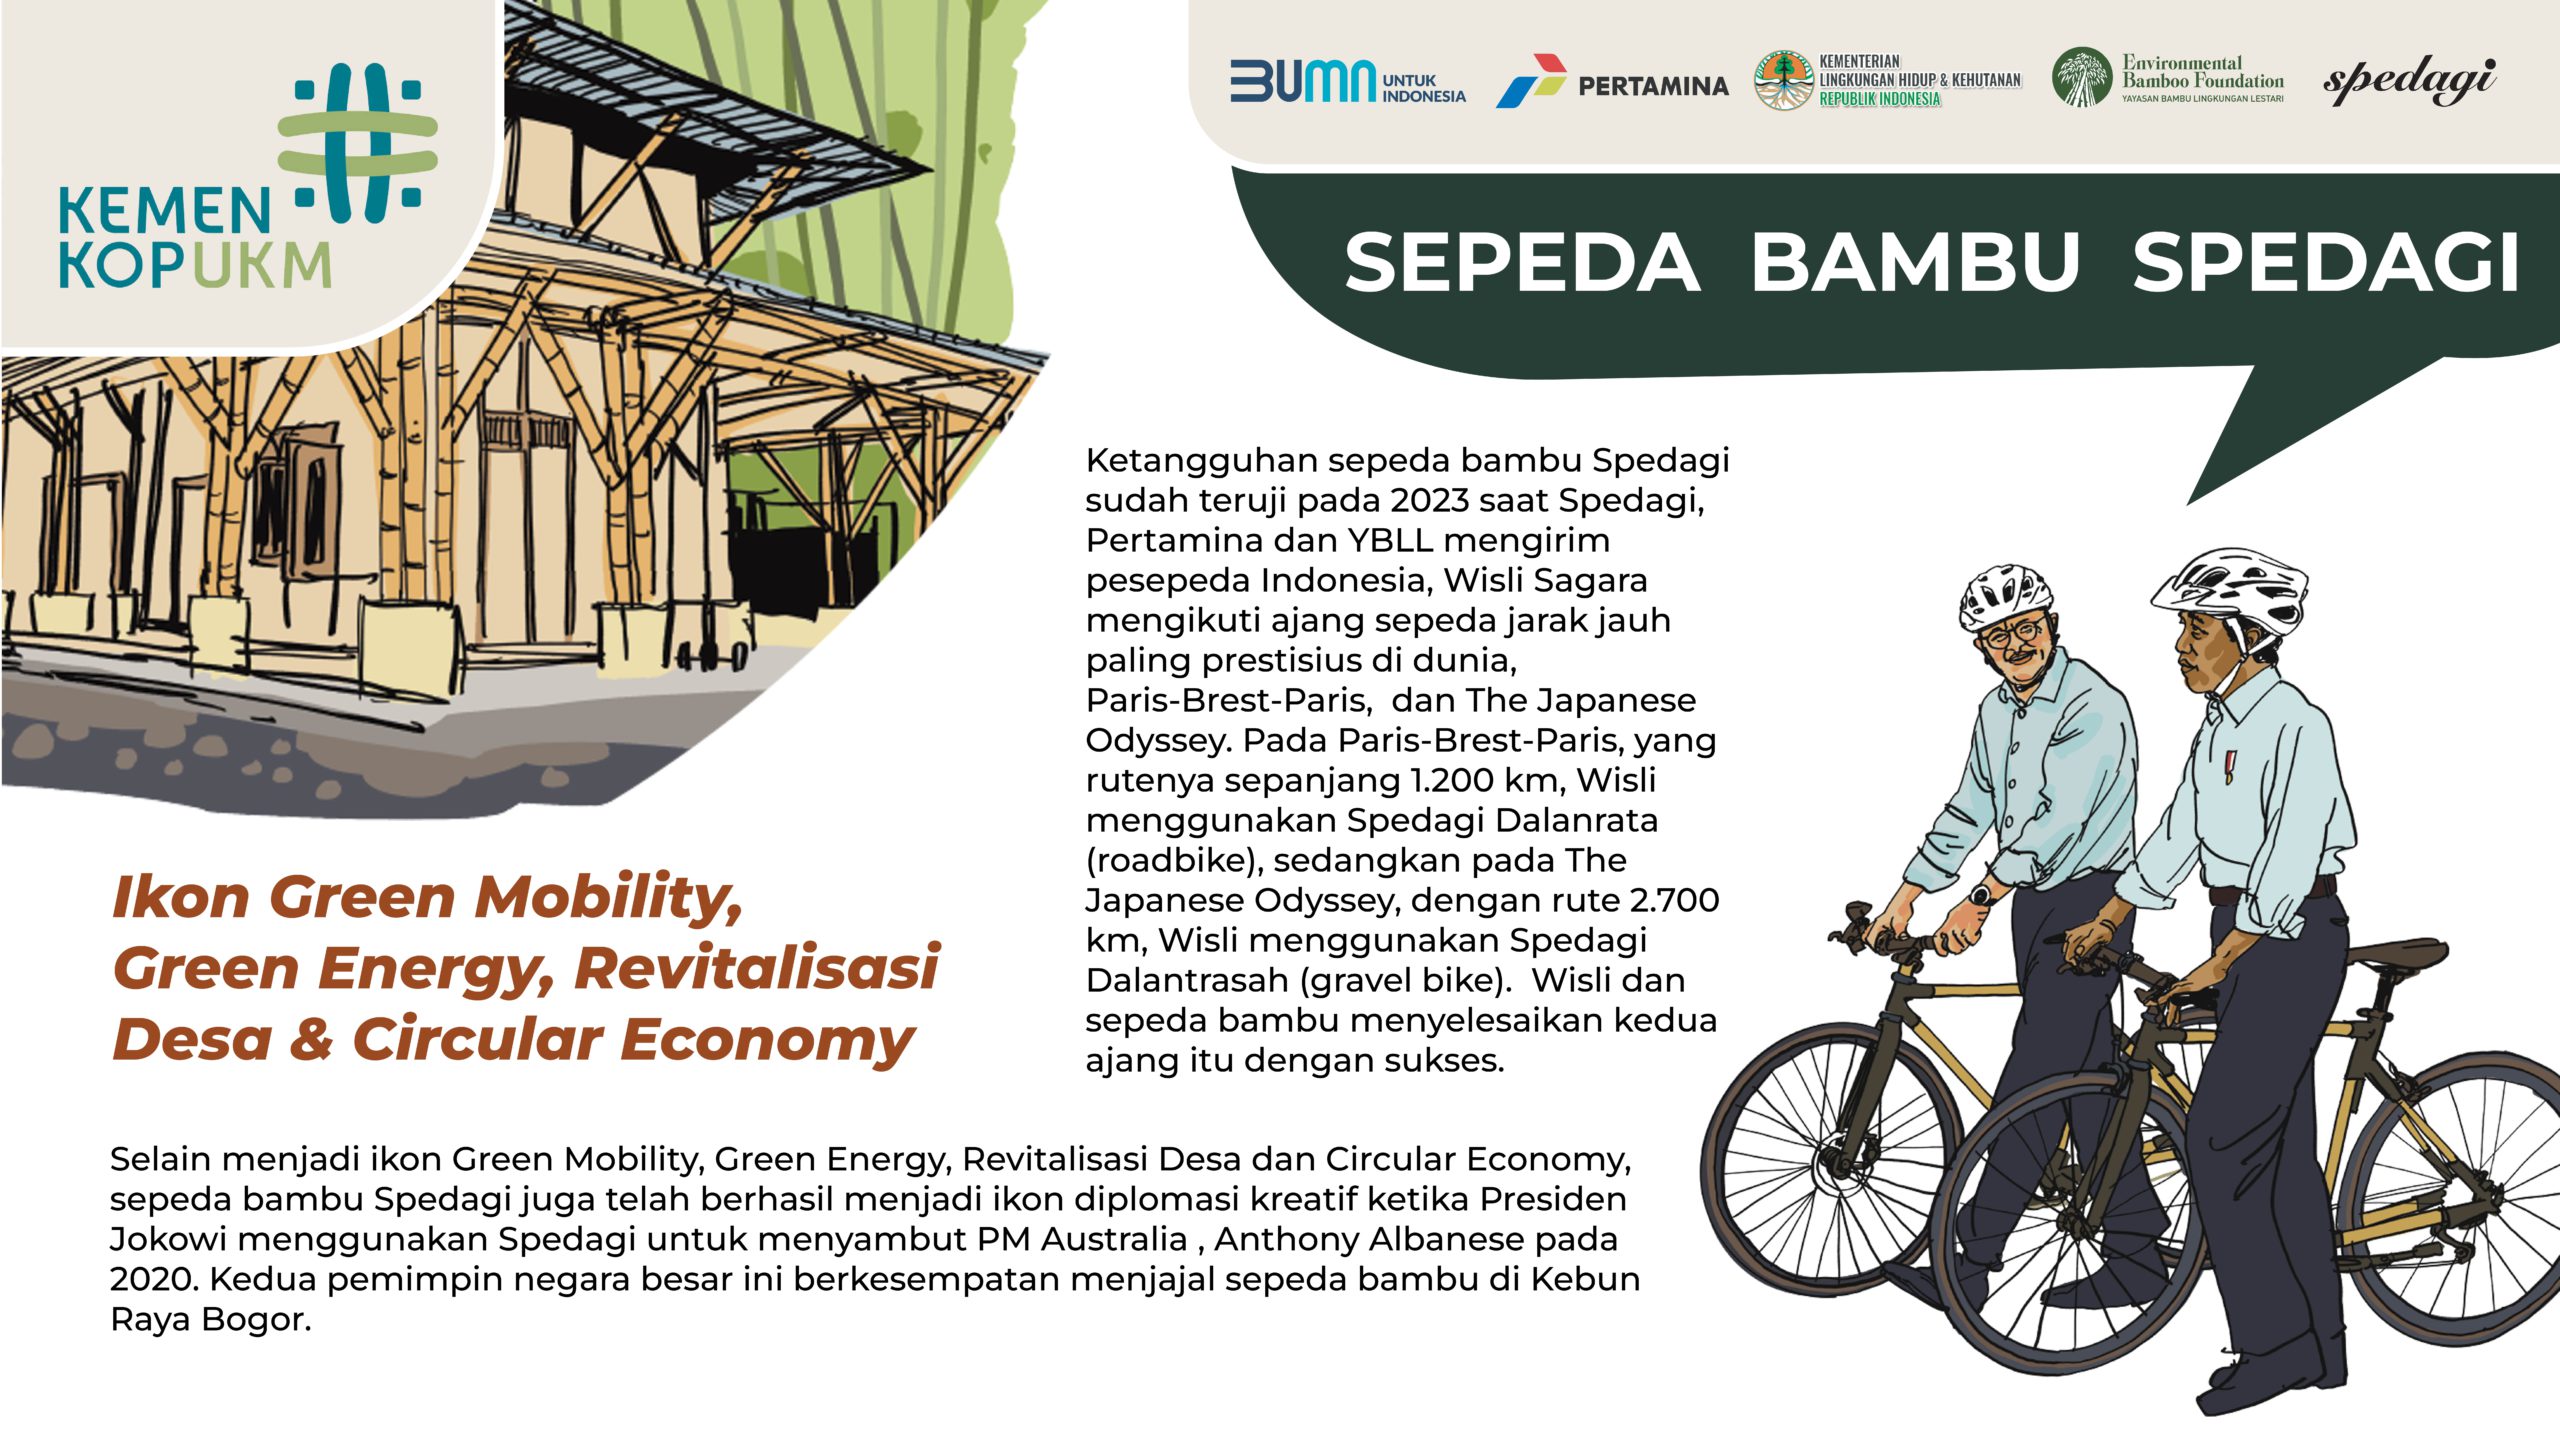 Sepeda Bambu Spedagi (Ikon Green Mobility, Green Energy, Revitalisasi Desa & Circular Economy)